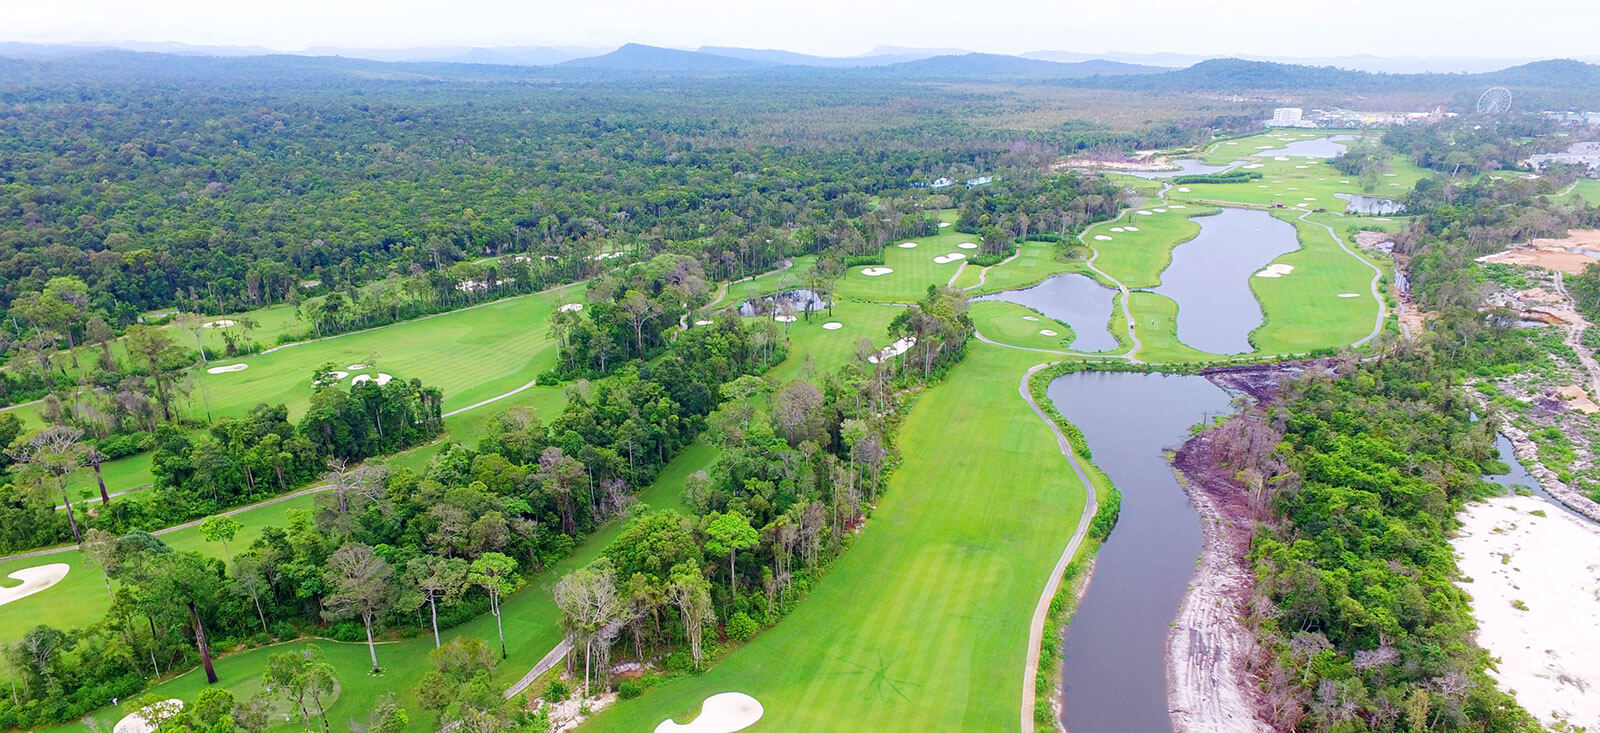 Sân golf Phú Quốc Vinpearl